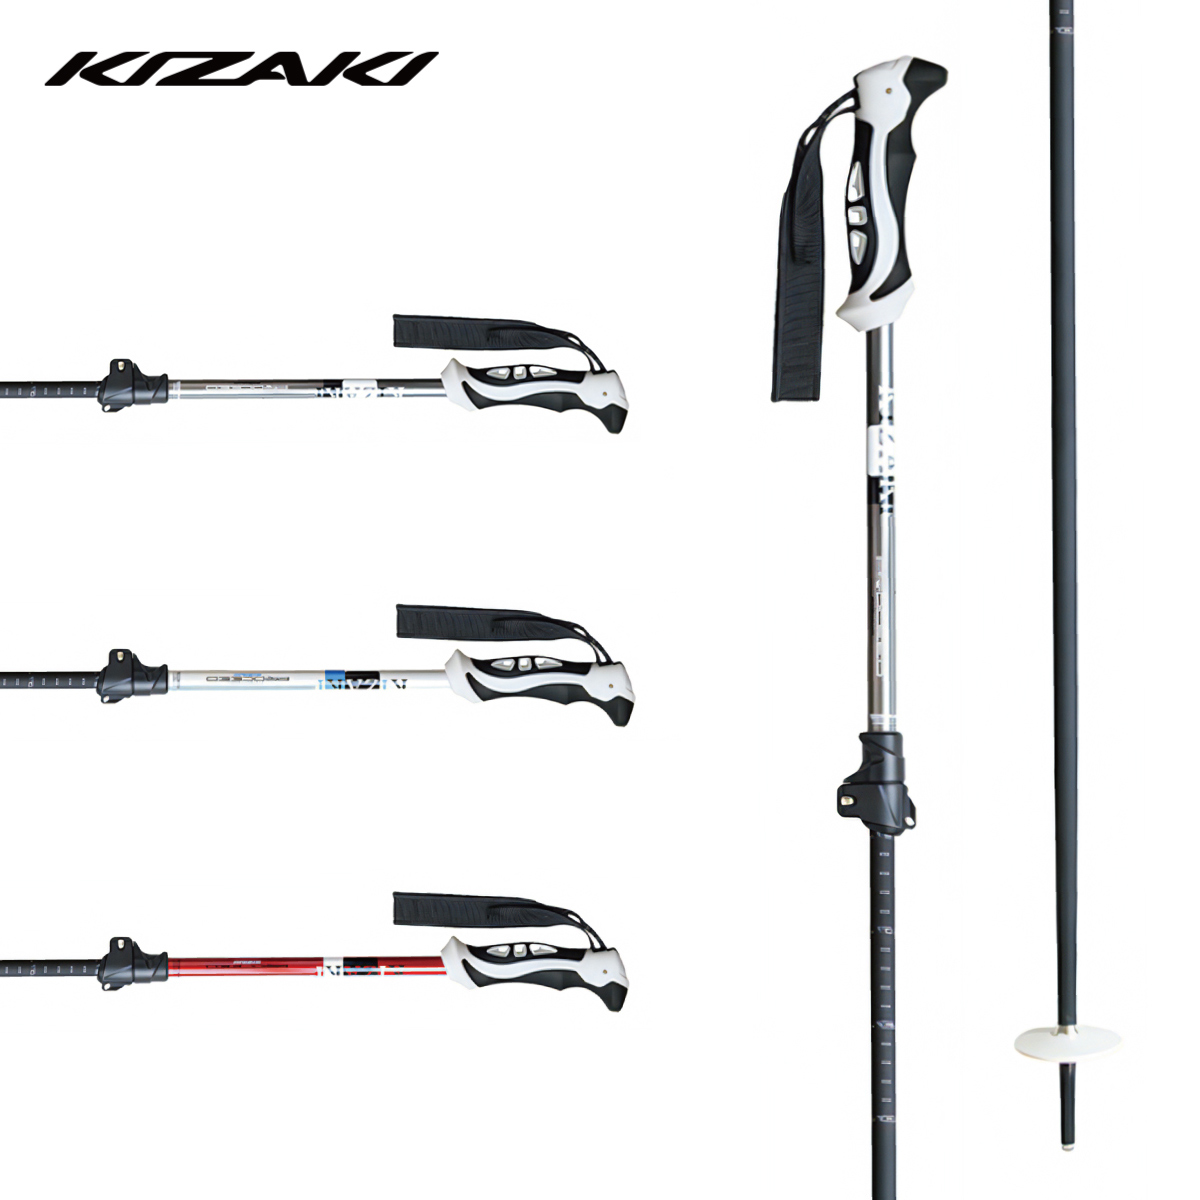 KIZAKIki The ki ski paul (pole) stock <2024> Proceed TL aluminium / KPBB-9010 flexible type stock 